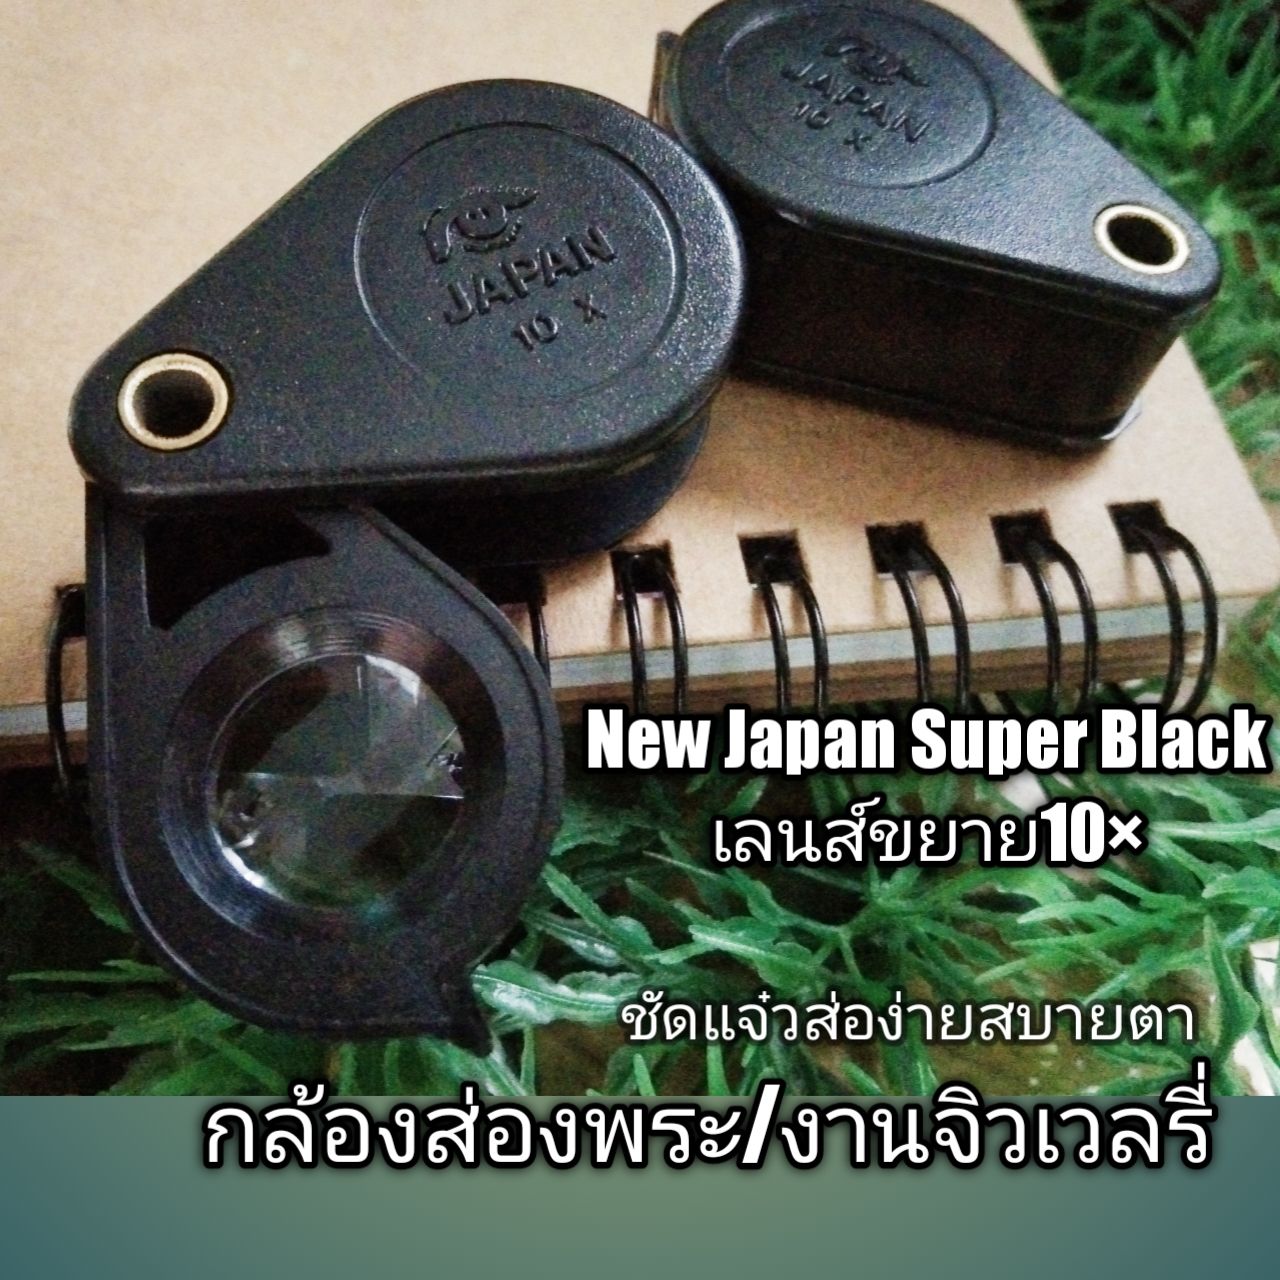 ? New Super Black Japan กล้องส่องพระ/งานจิวเวลรี่ สีดำสวย เลนส์ขยาย 10× เลนดีชัดแจ๋ว ส่องง่ายสบายตา